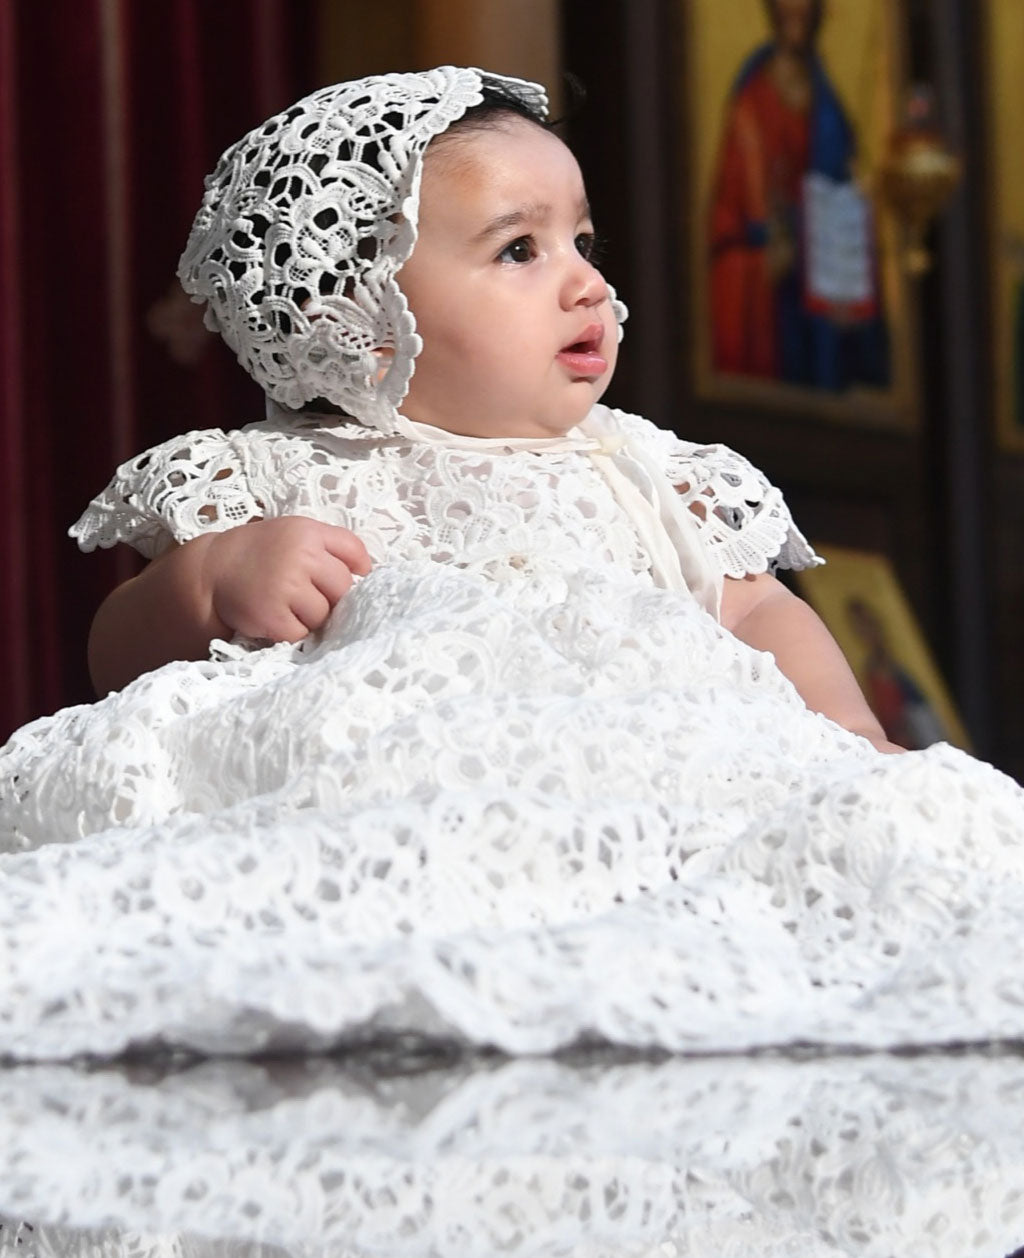 Zoya's Baptism Day | Lola Christening Gown & Bonnet Set by Baby Beau & Belle